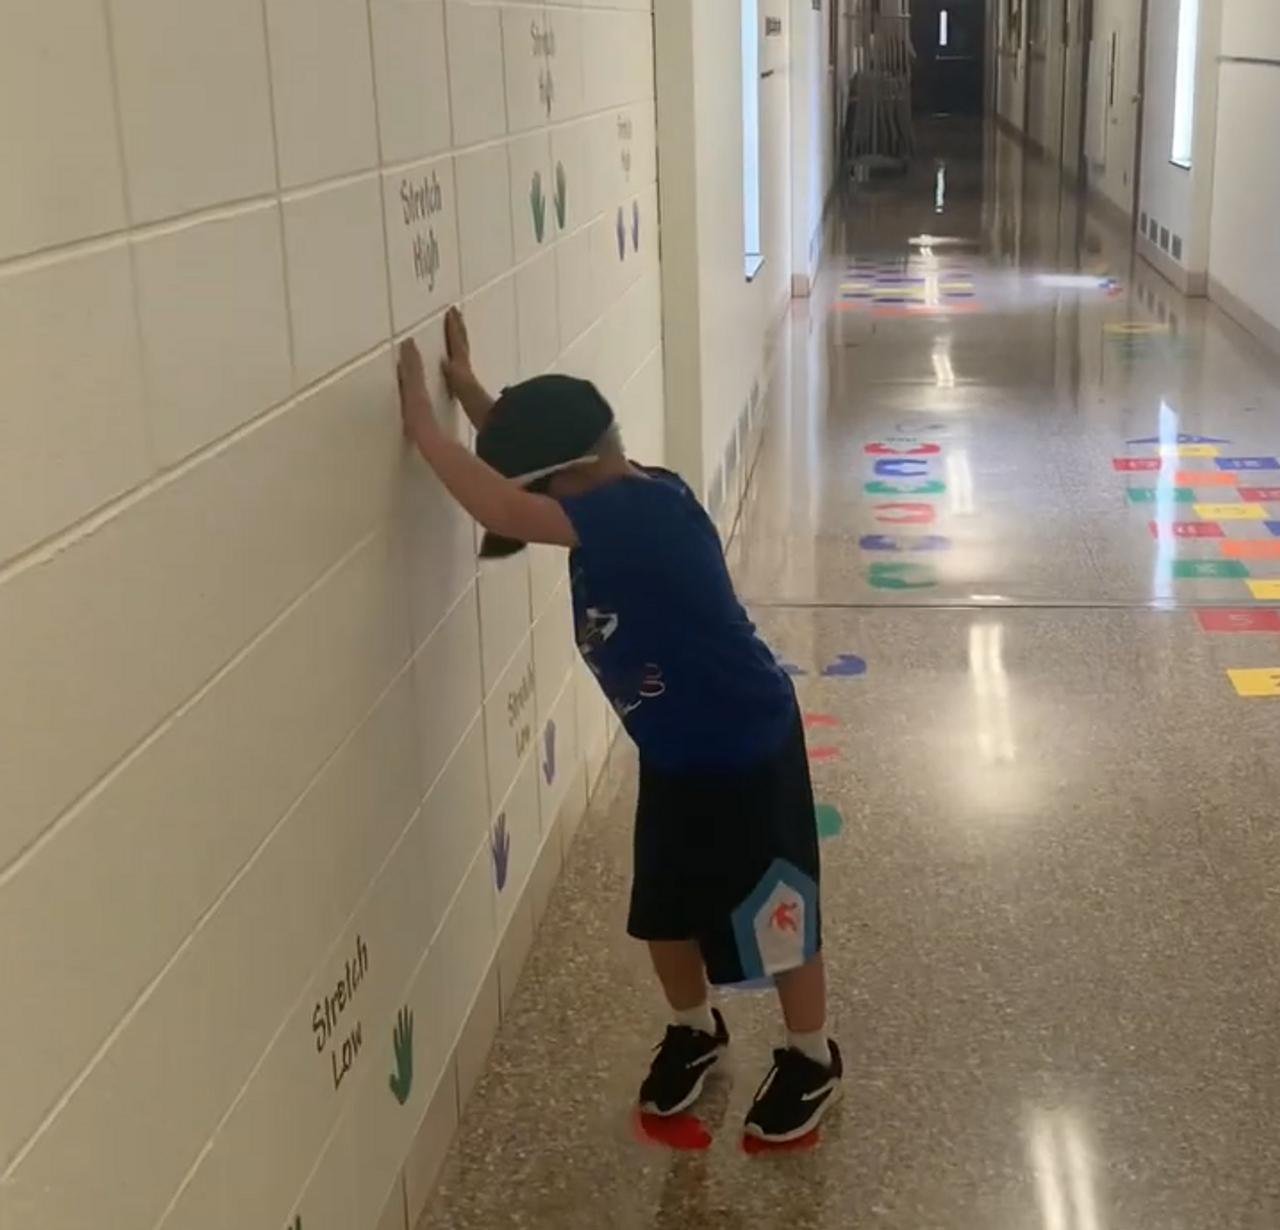 Sensory Path Hallway Floor School Decal Stickers Feet Hands Stretch